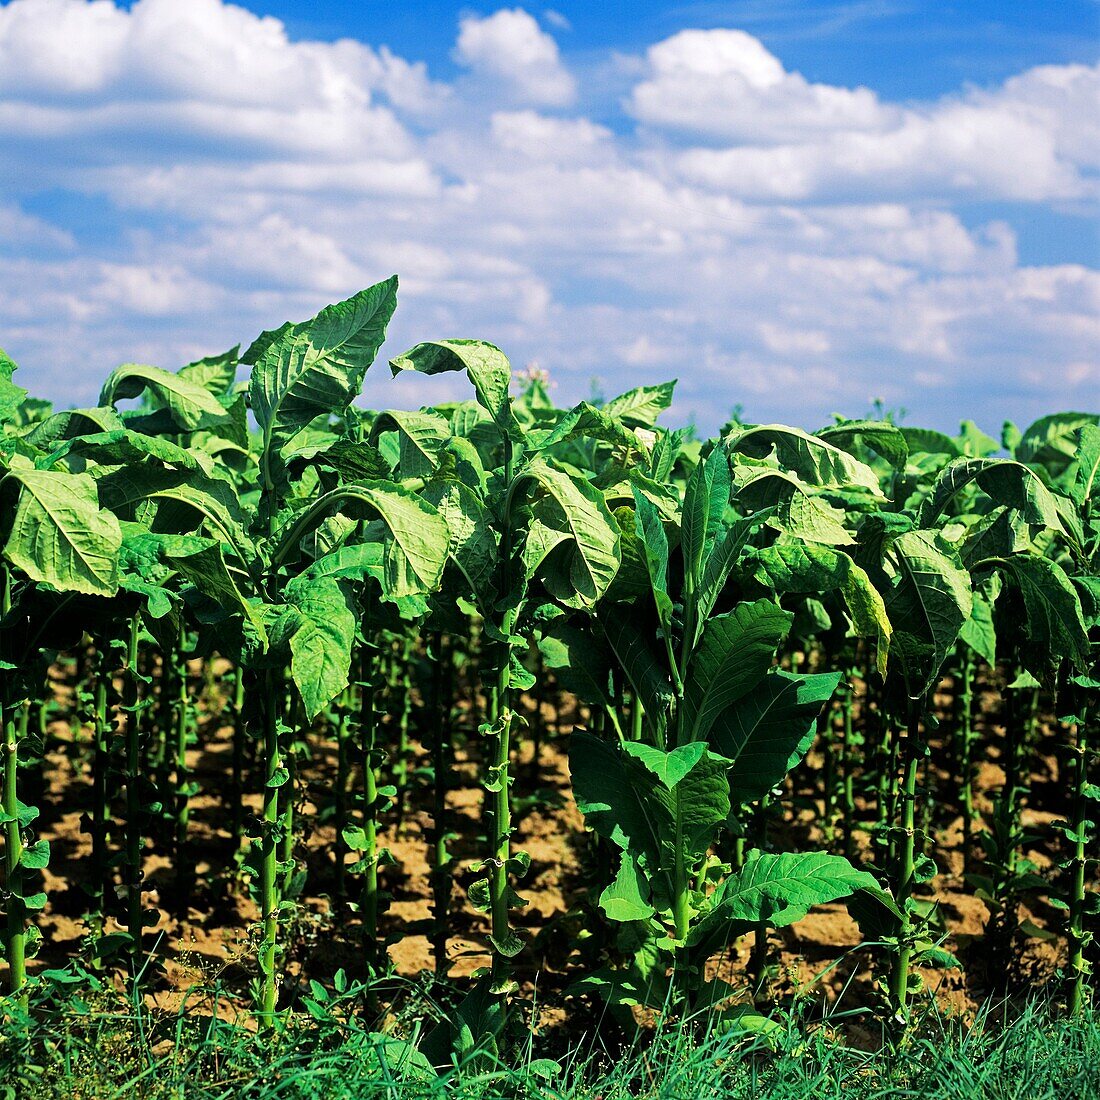 Virginian tobacco field, Alsace, France